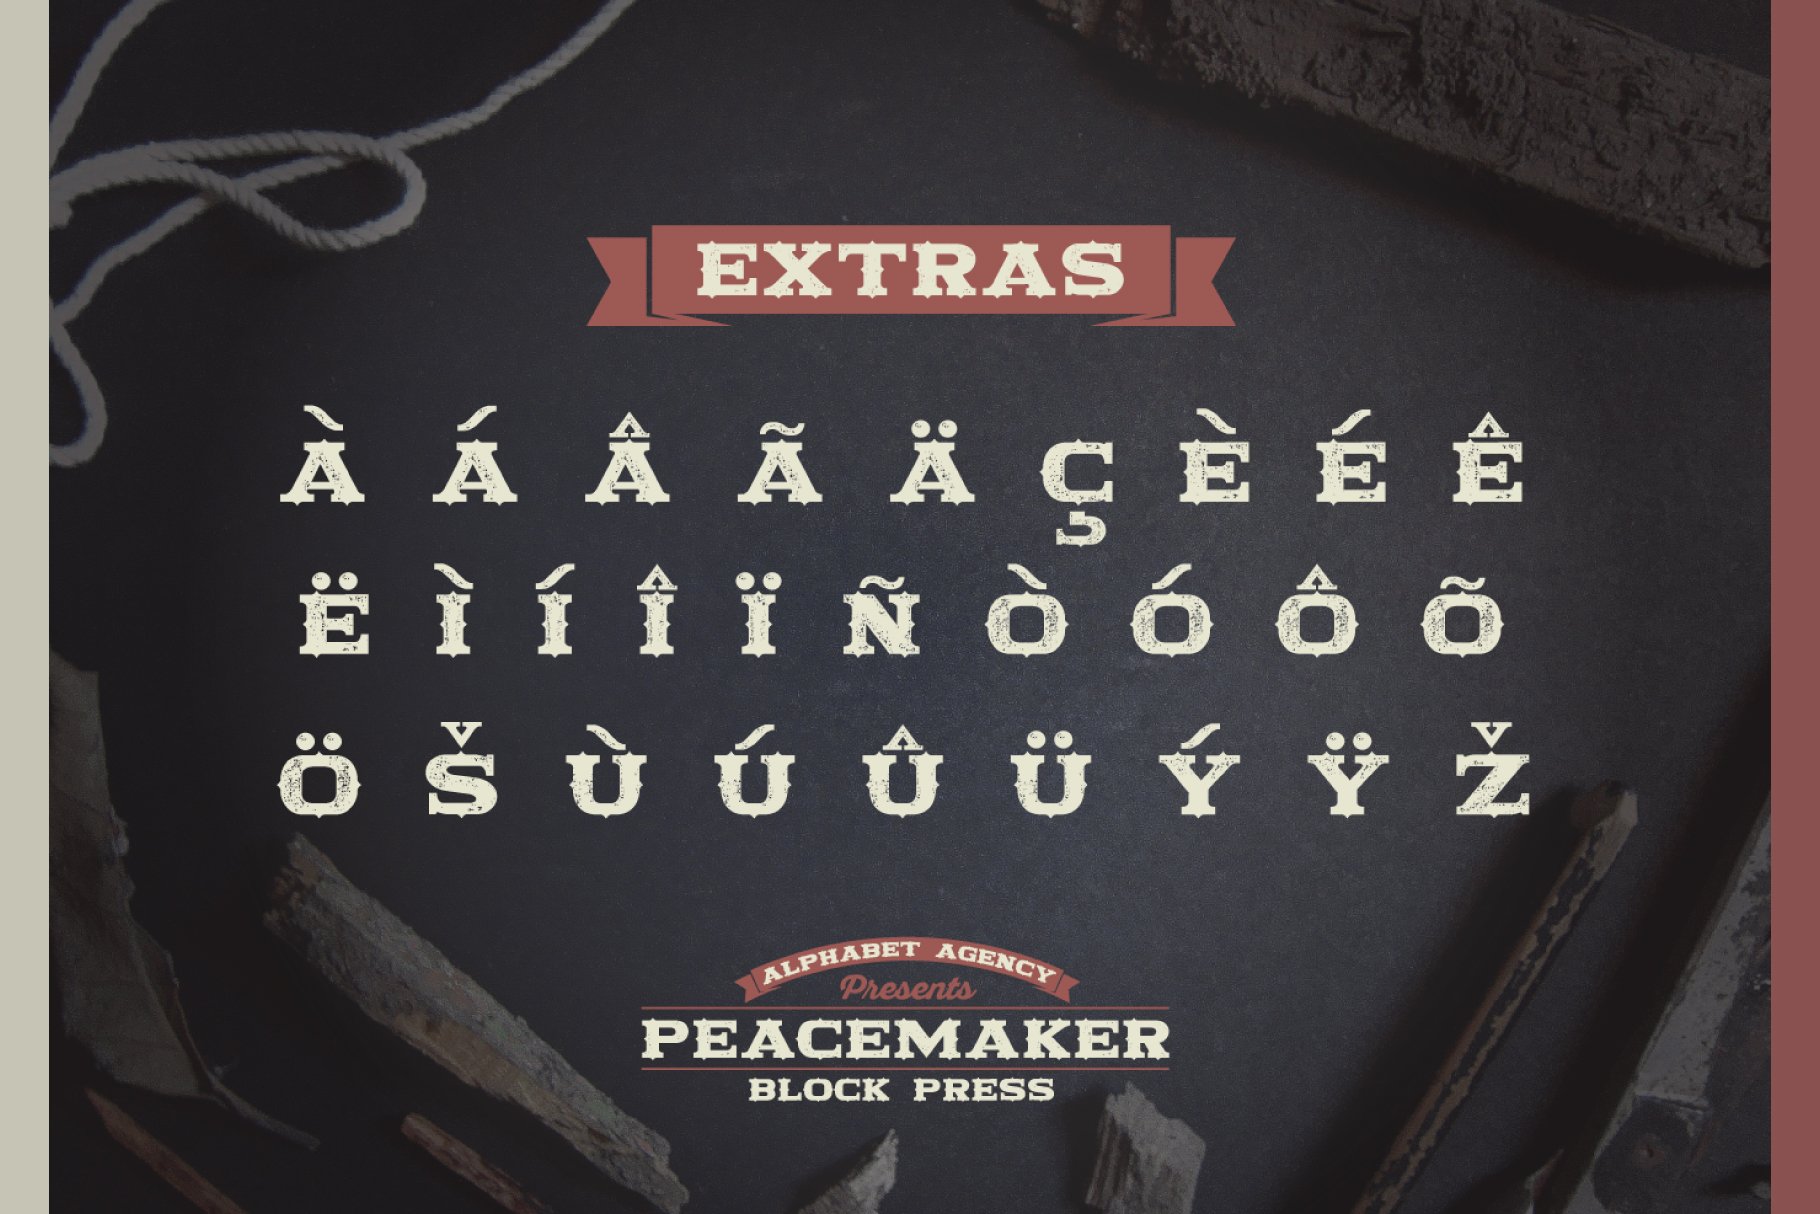 peacemaker blockpress extras2 1820x1214 486